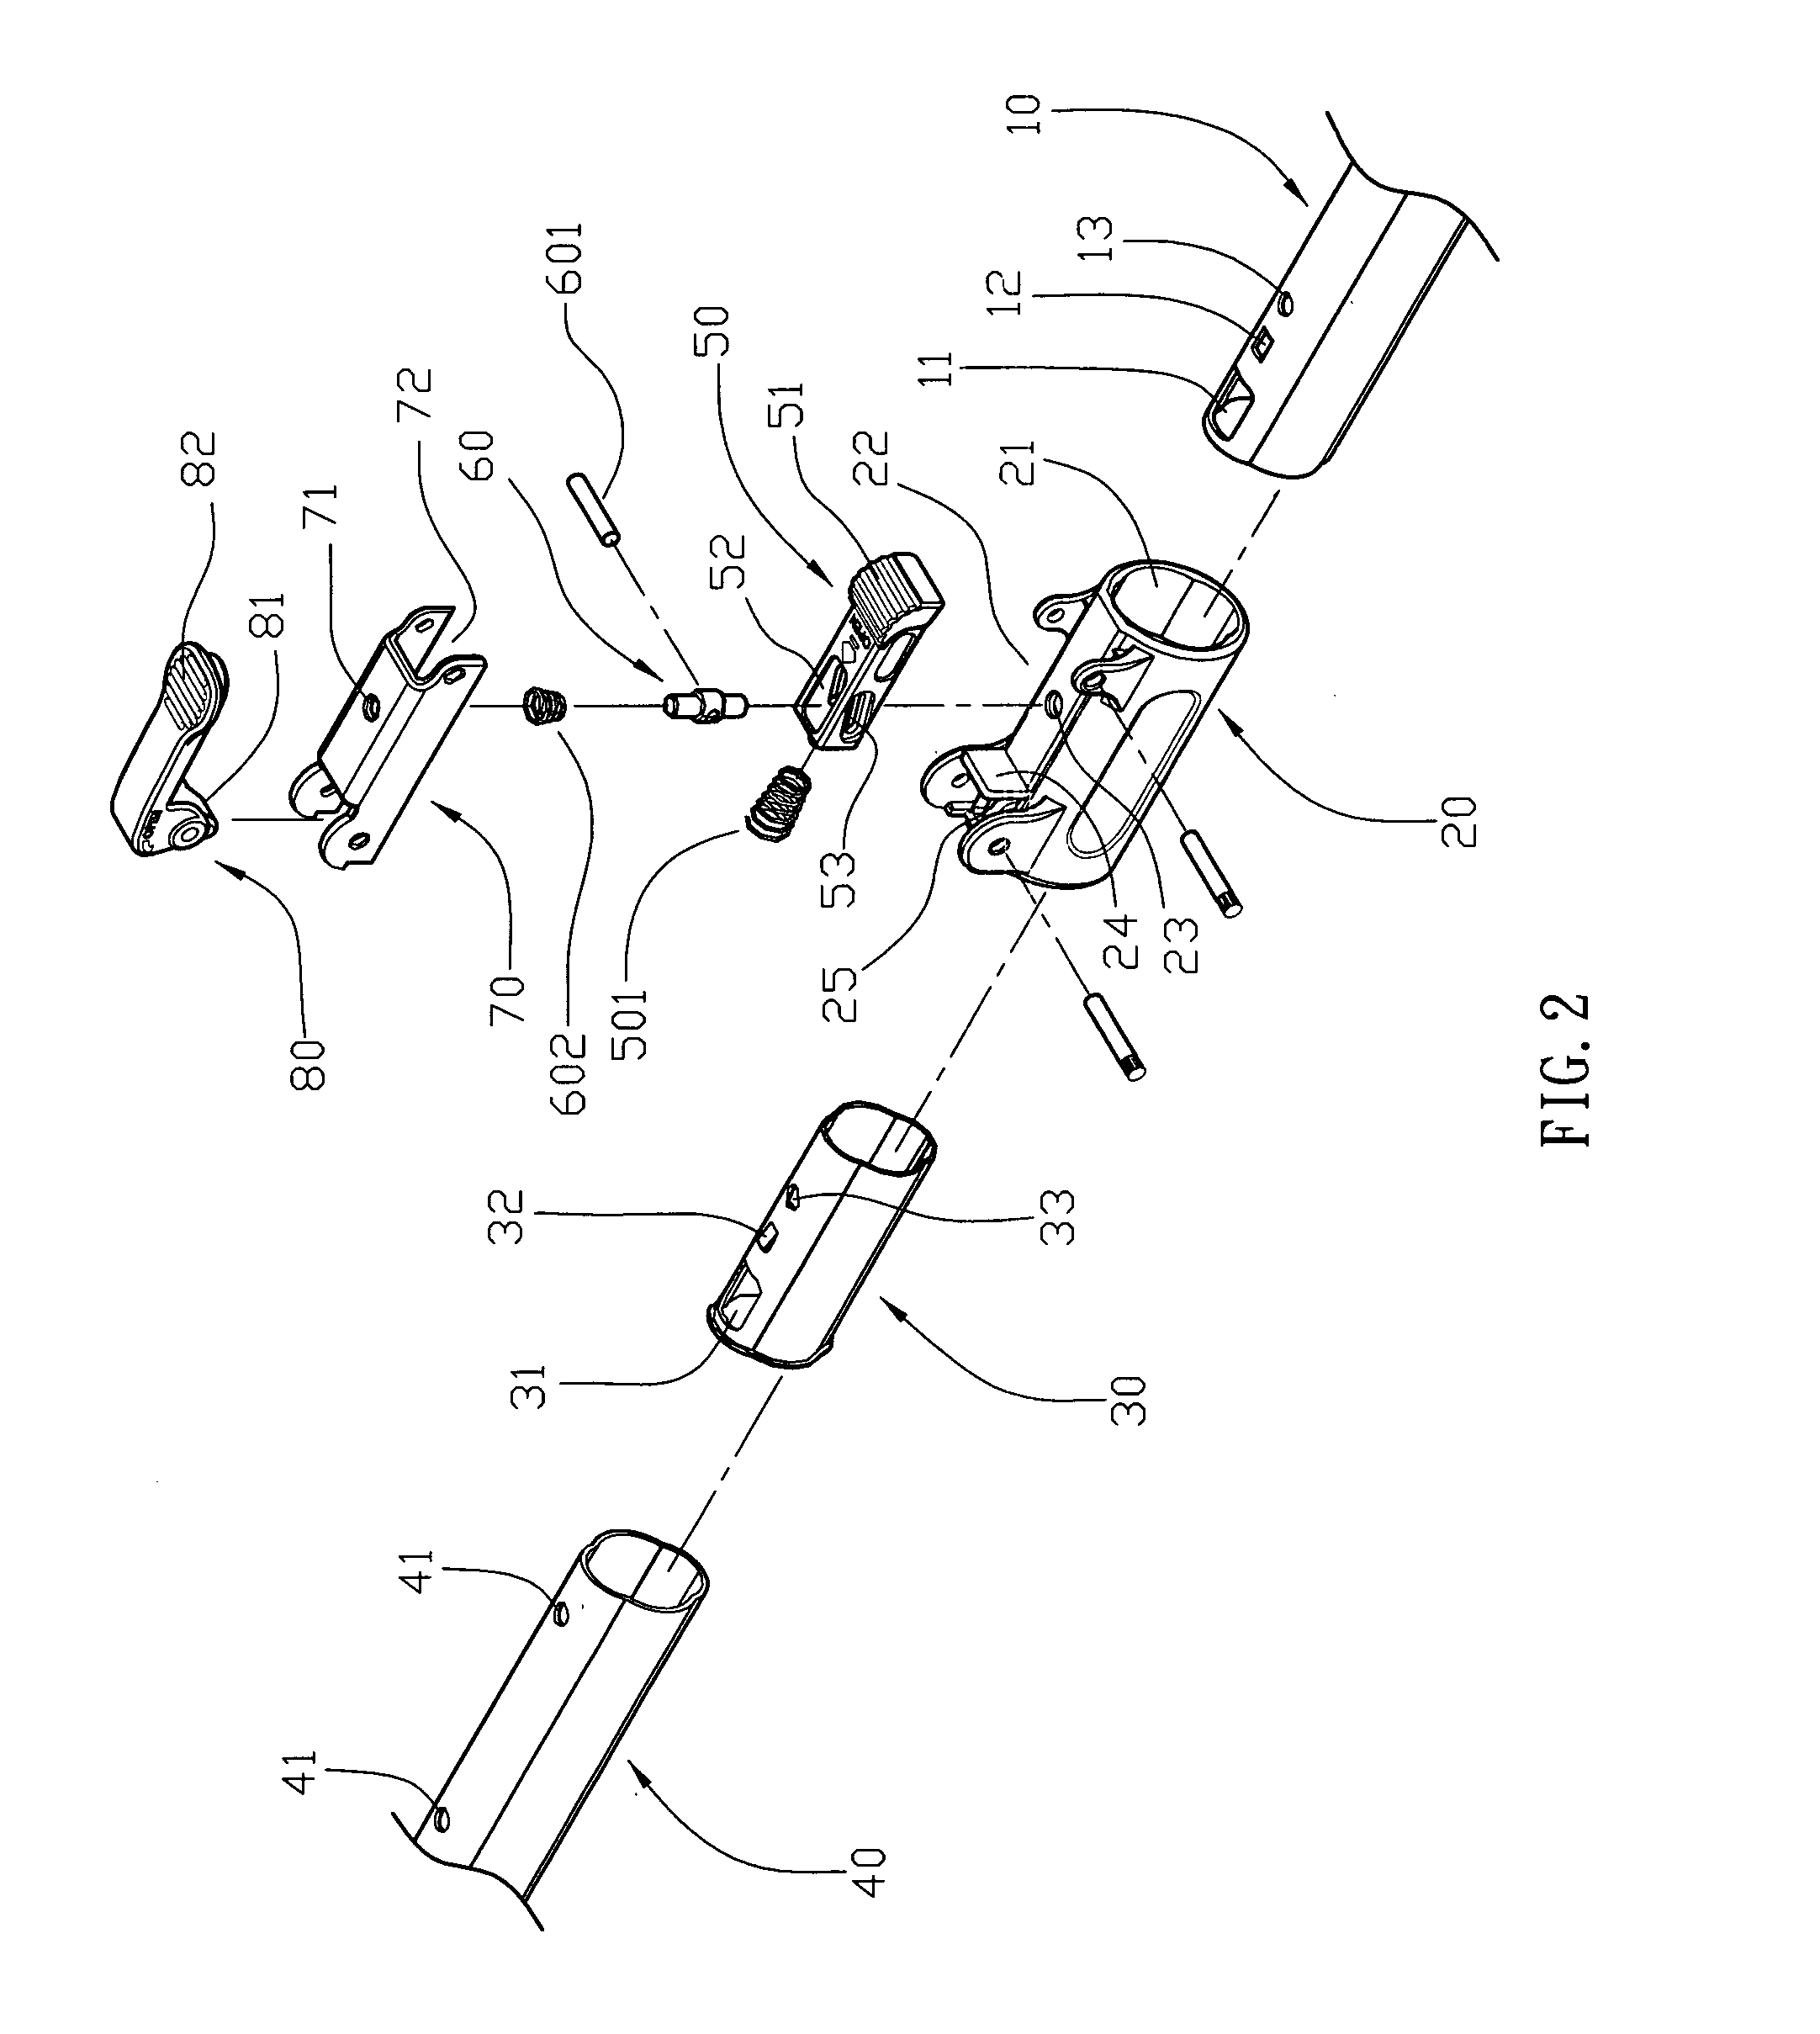 Telescopically adjustable pipe